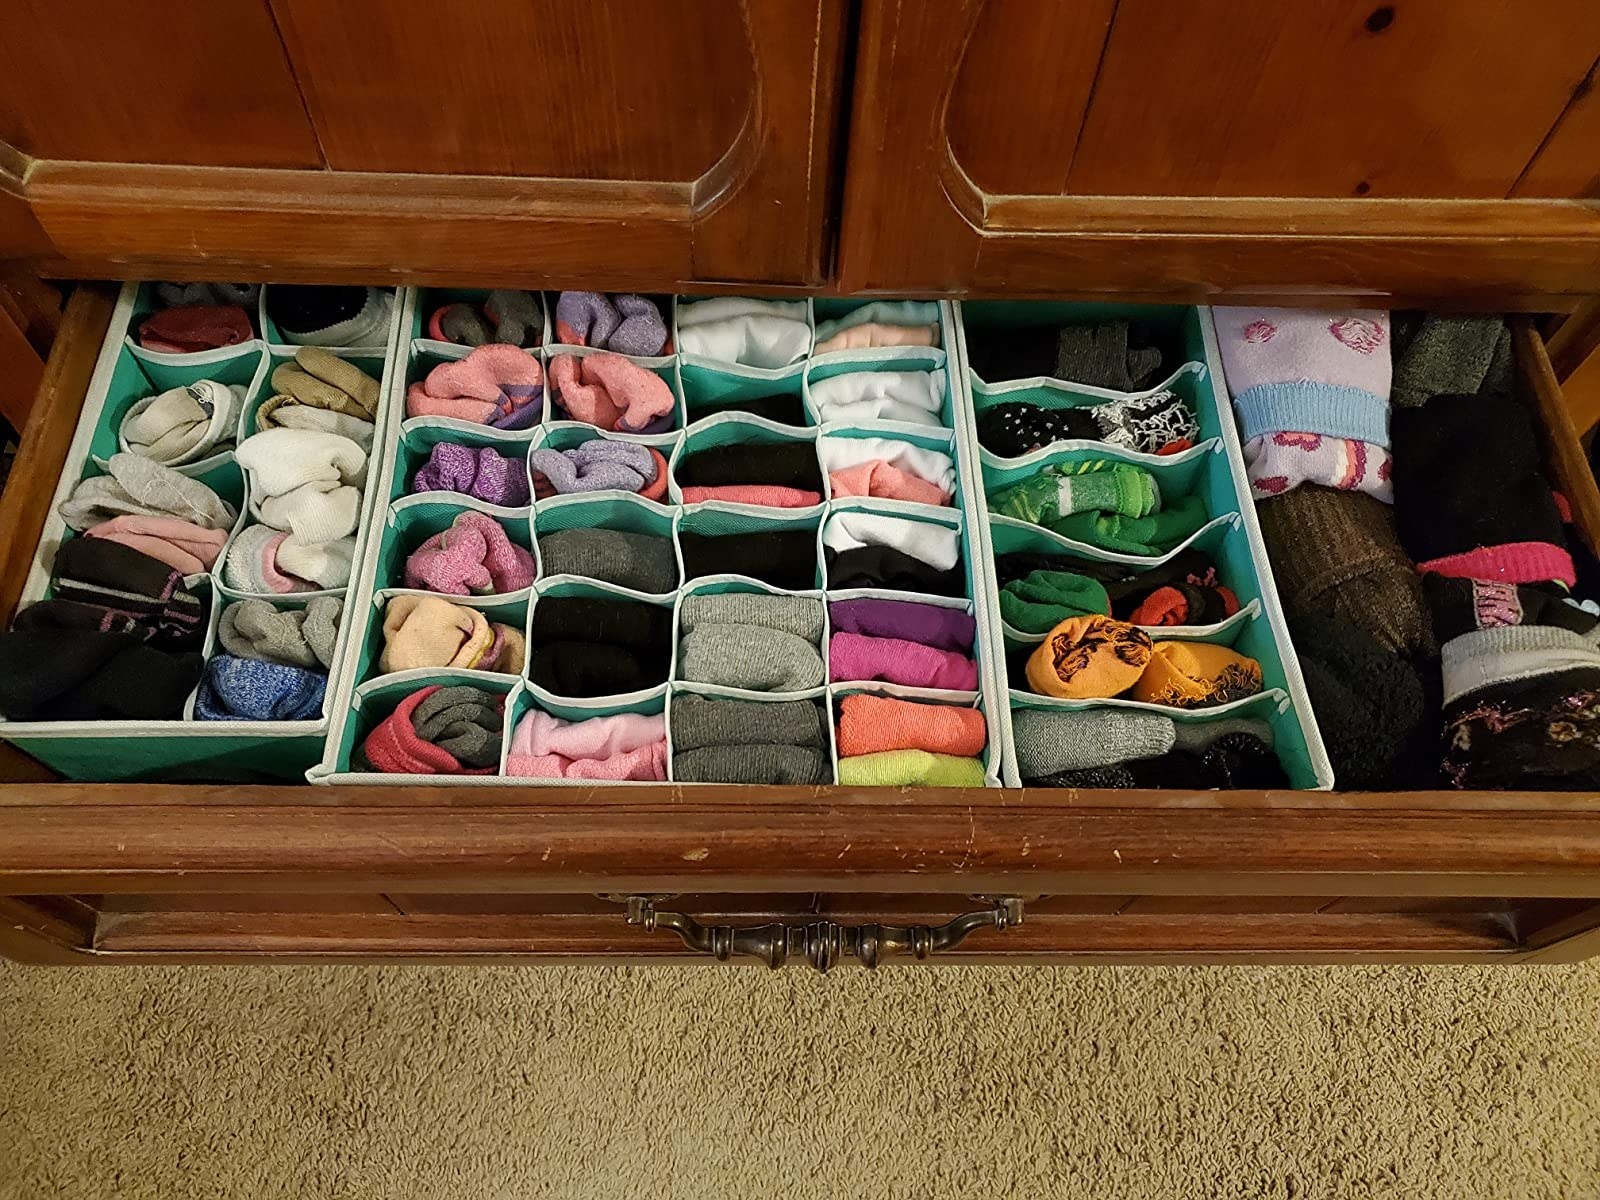 The drawer organizers organizing many pairs of socks